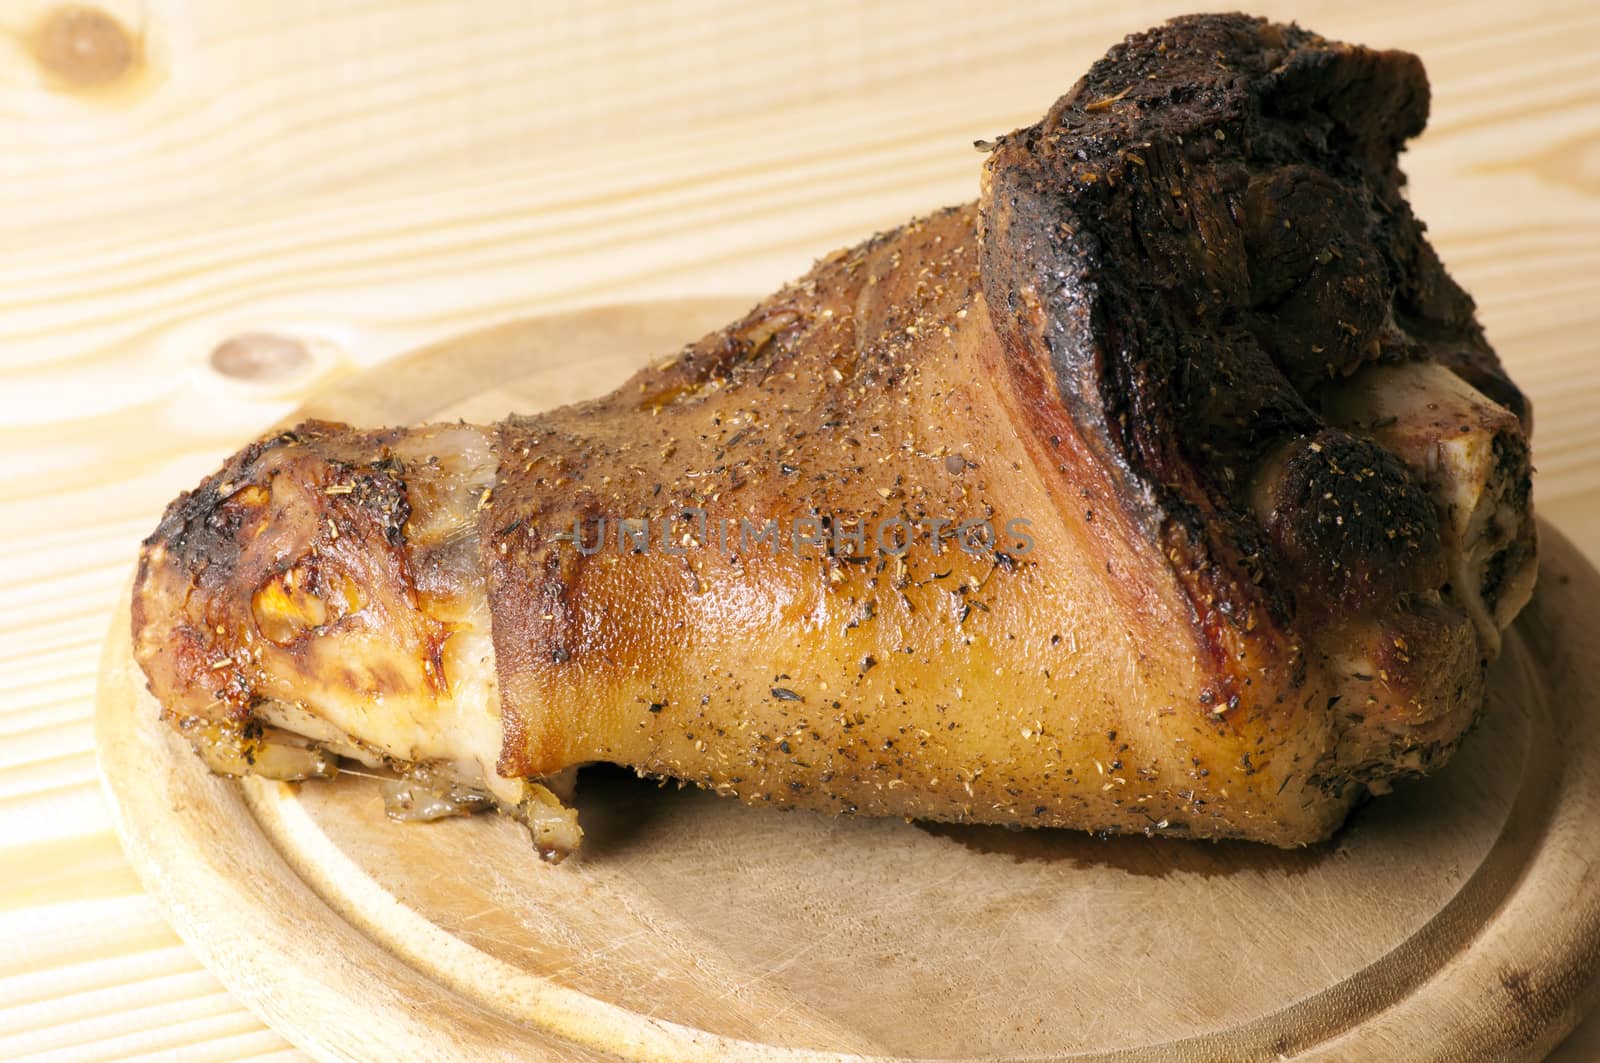 Roasted pork leg (rulka, veprove koleno) by dred